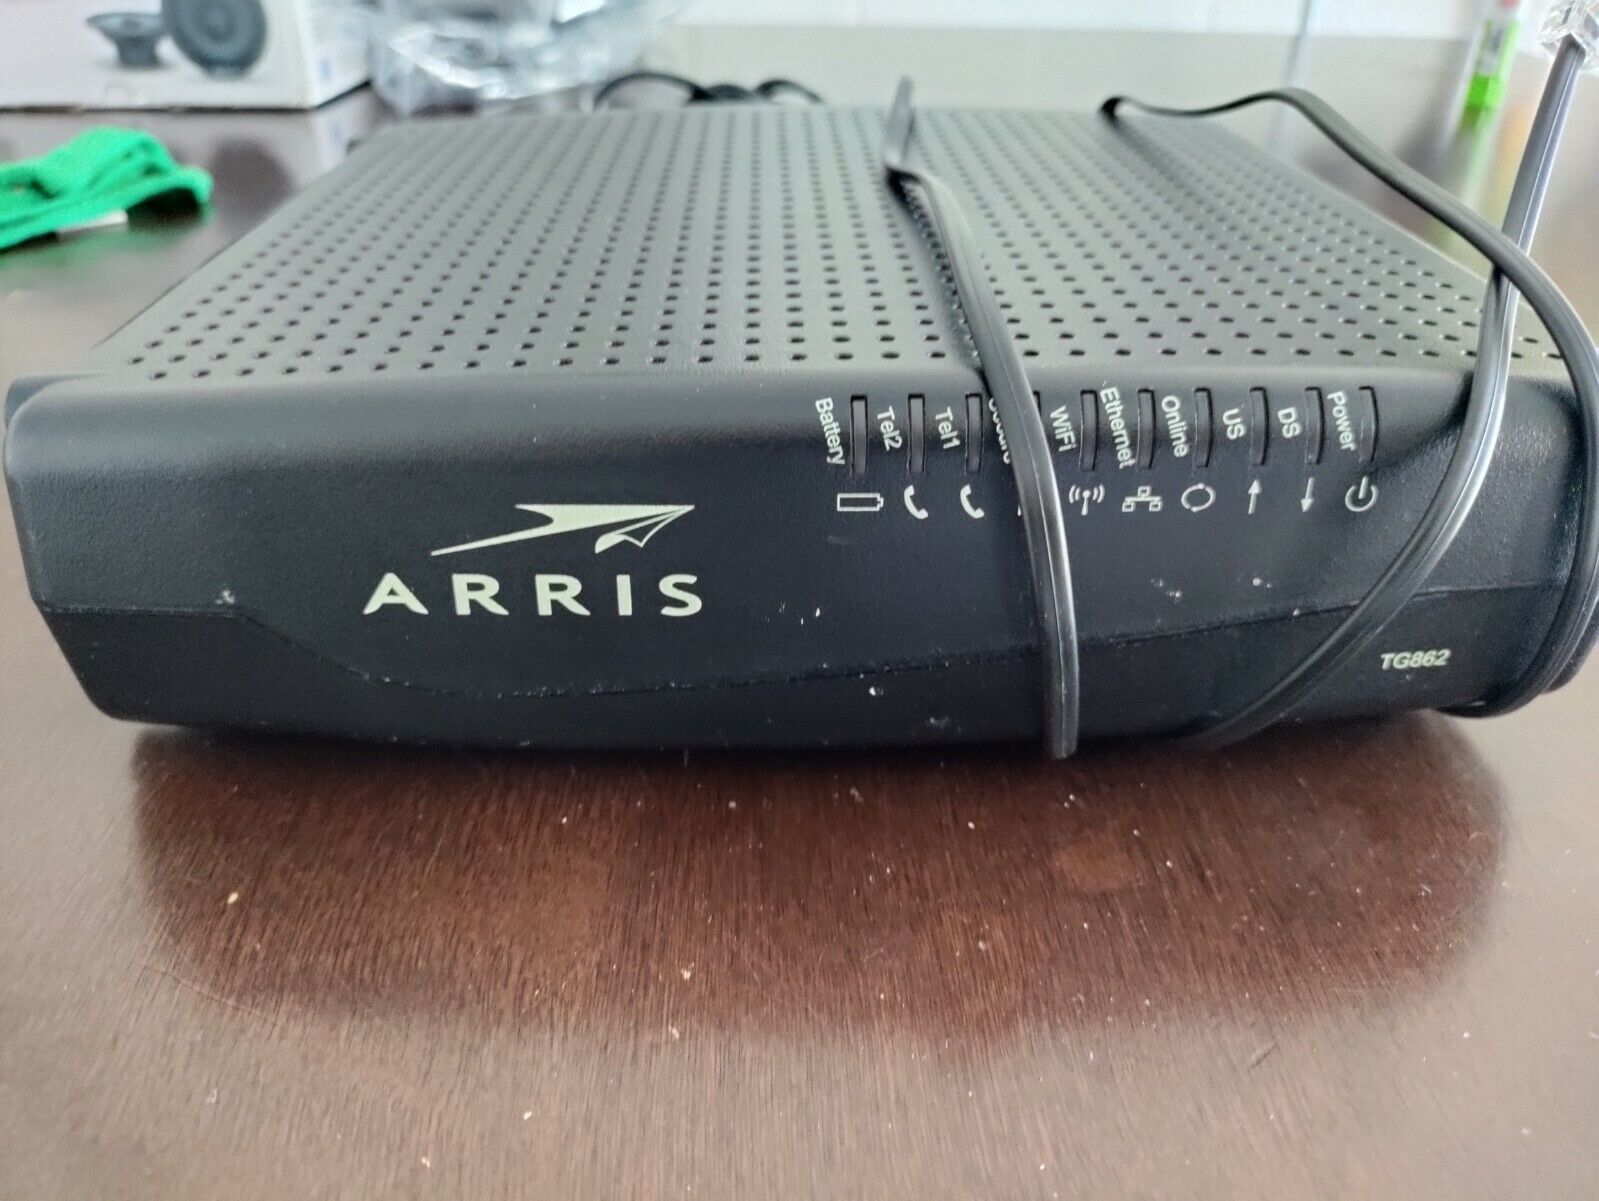 ARRIS TG862G/TW WI/FI WIRELESS DOCSIS 3.0  COMCAST GATEWAY ROUTER MODEM